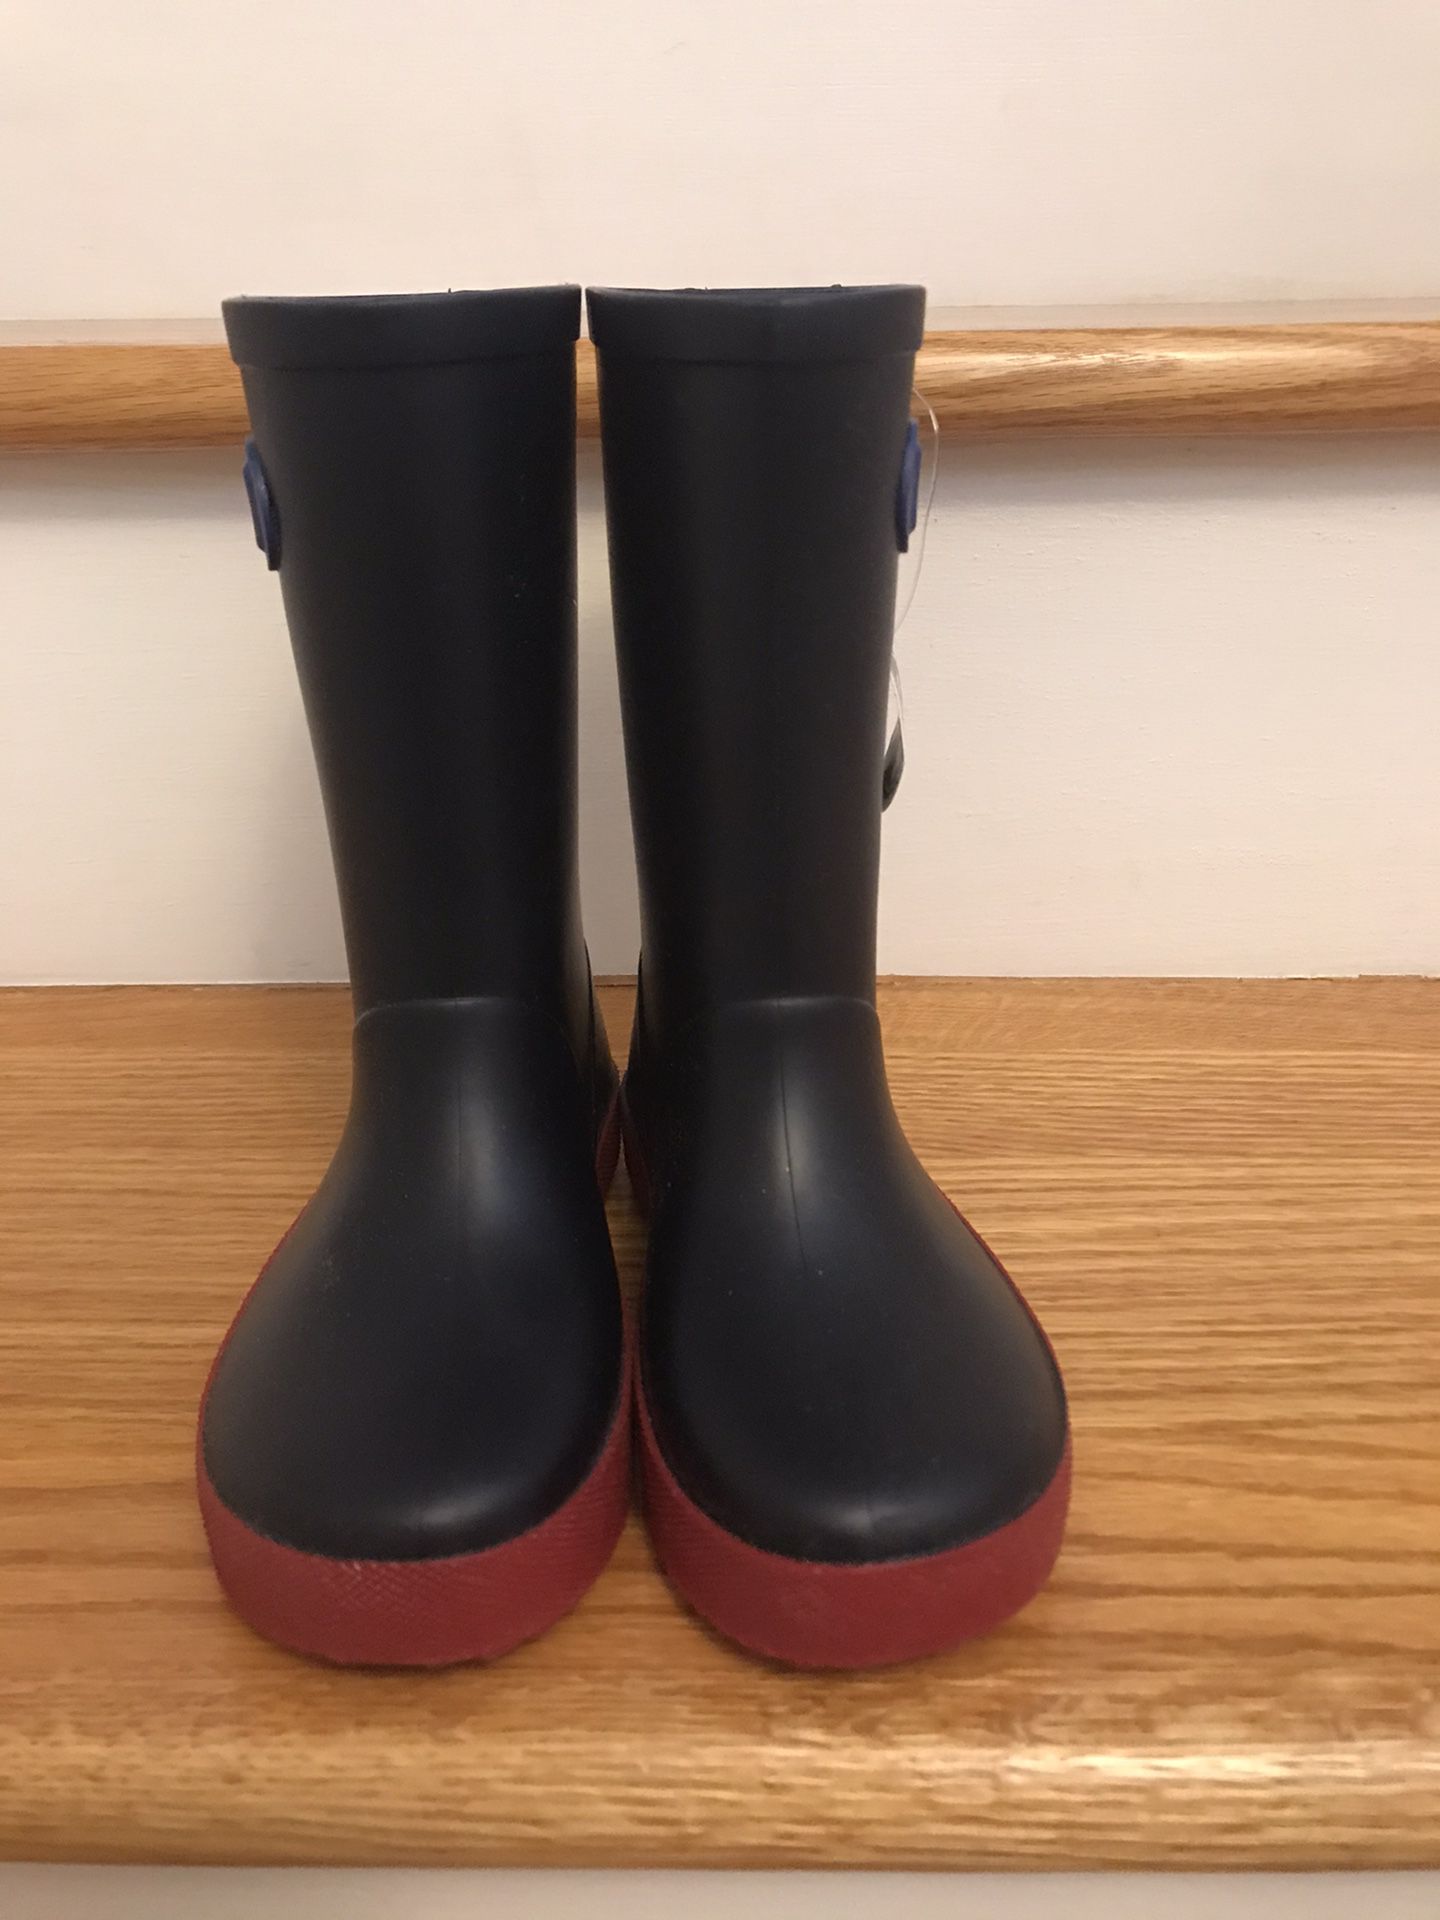 New Igor rain boots- kids size 27 ( size 10 US)